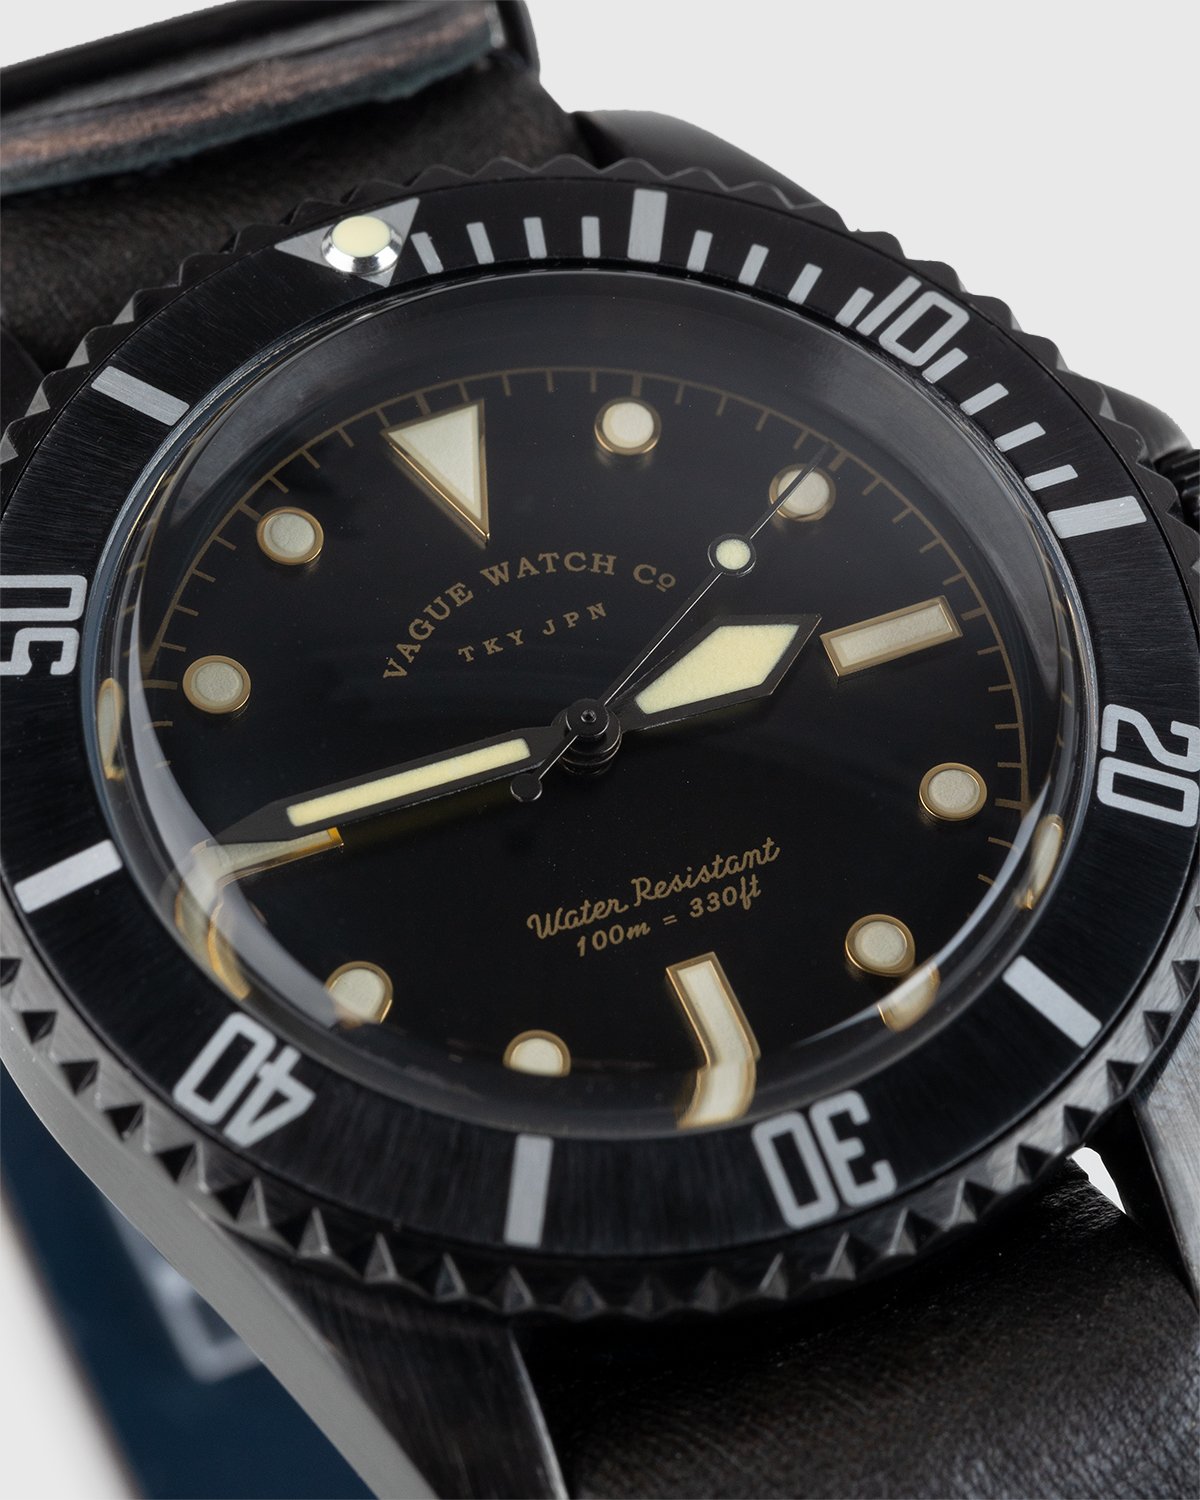 Vague Watch Co. - Submariner Black - Accessories - Black - Image 2